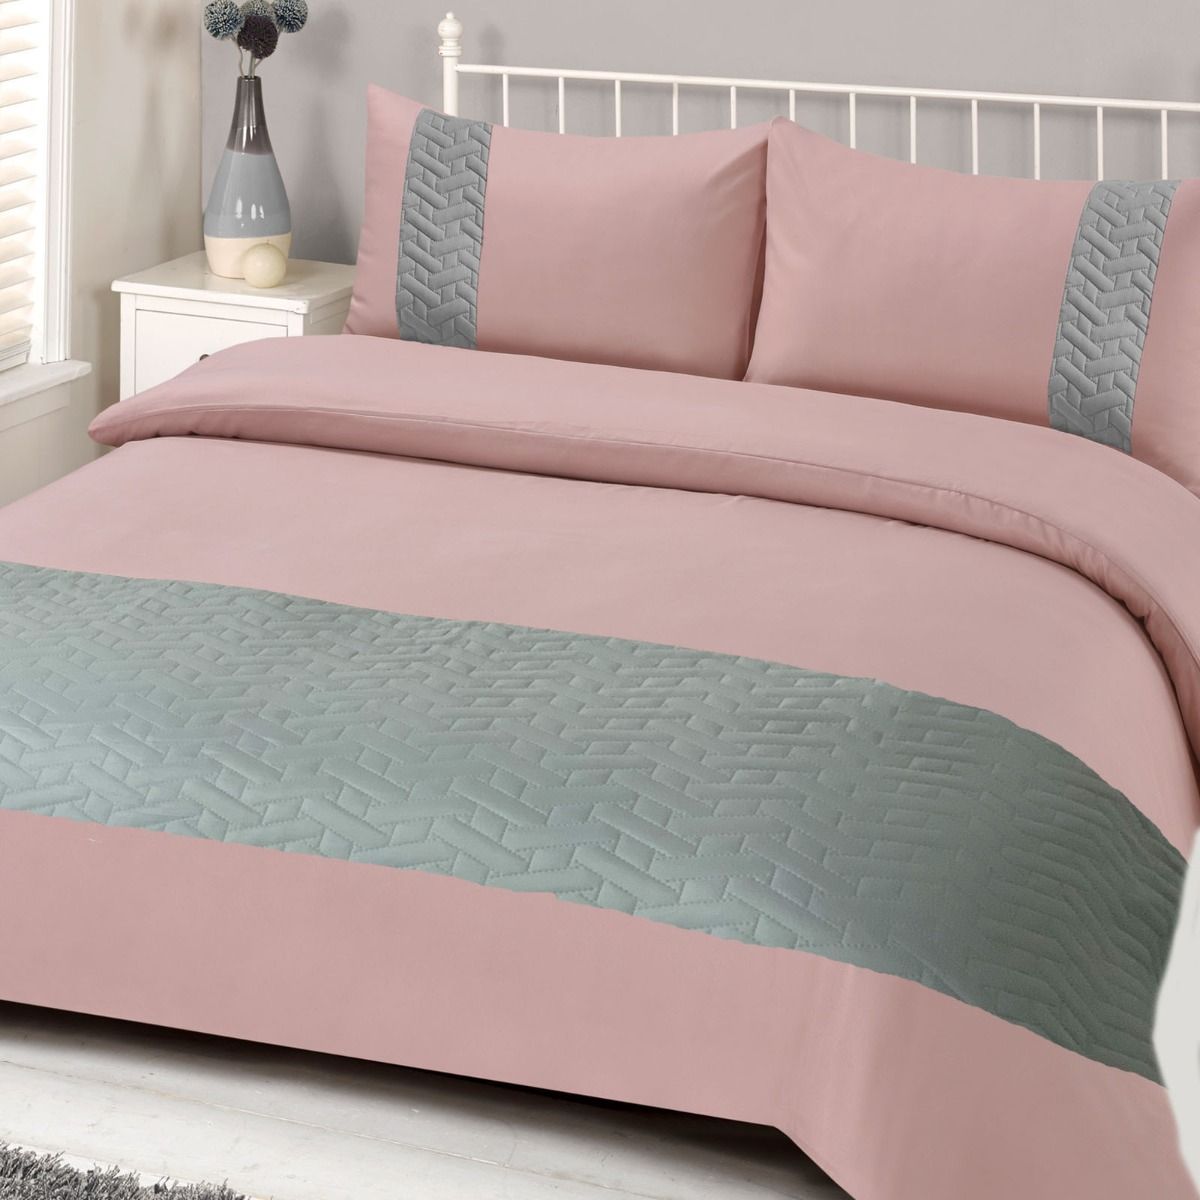 Brentfords Pinsonic Duvet Cover Bedding Set, Blush Pink - King